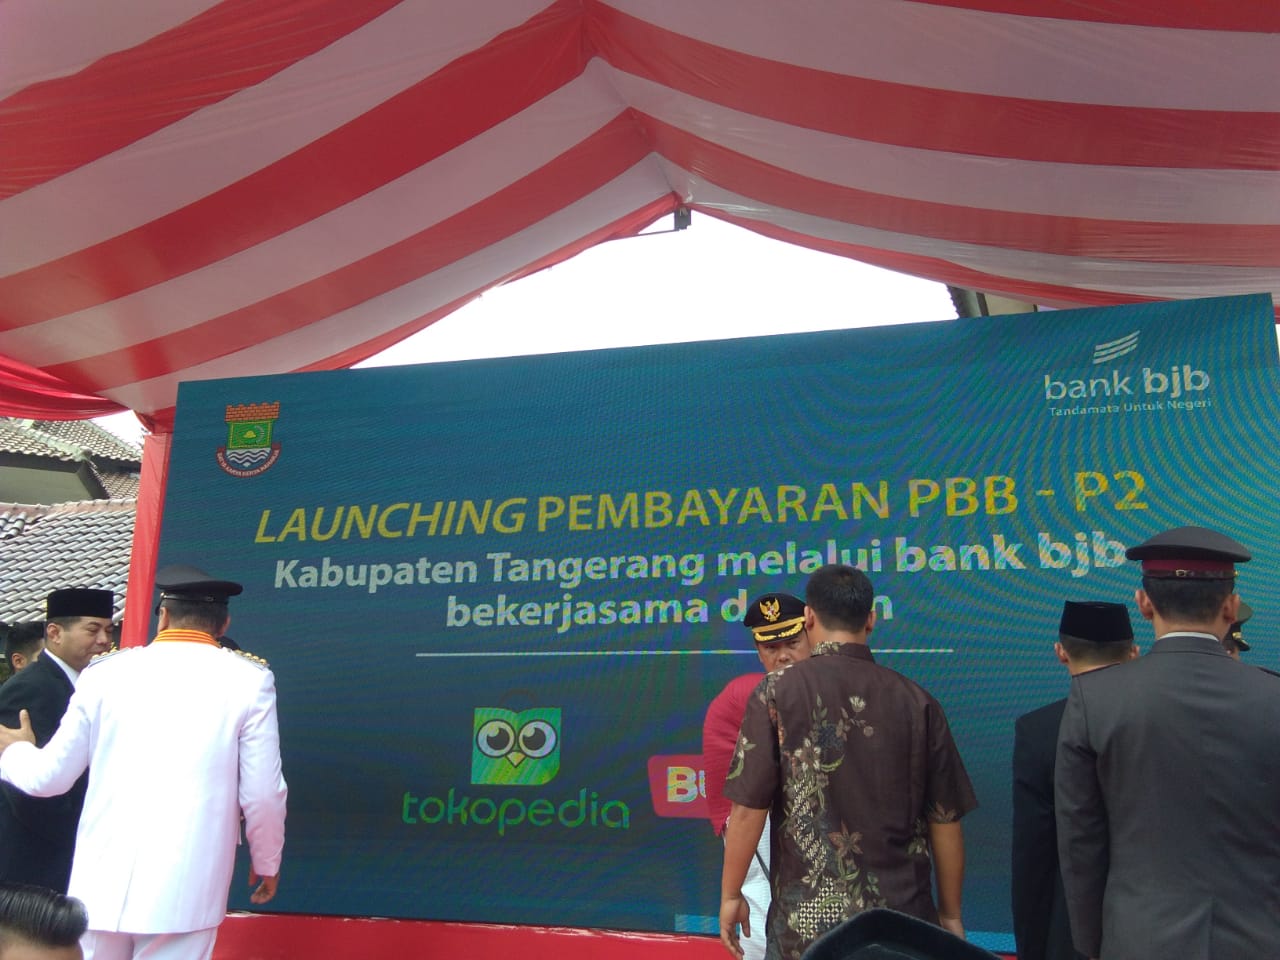 Kegiatan launching pembayaran Pajak Bumi dan Bangunan (PBB) - P2 Kabupaten Tangerang melalui BANK BJB yang bekerjasama dengan aplikasi Bukalapak dan Tokopedia.